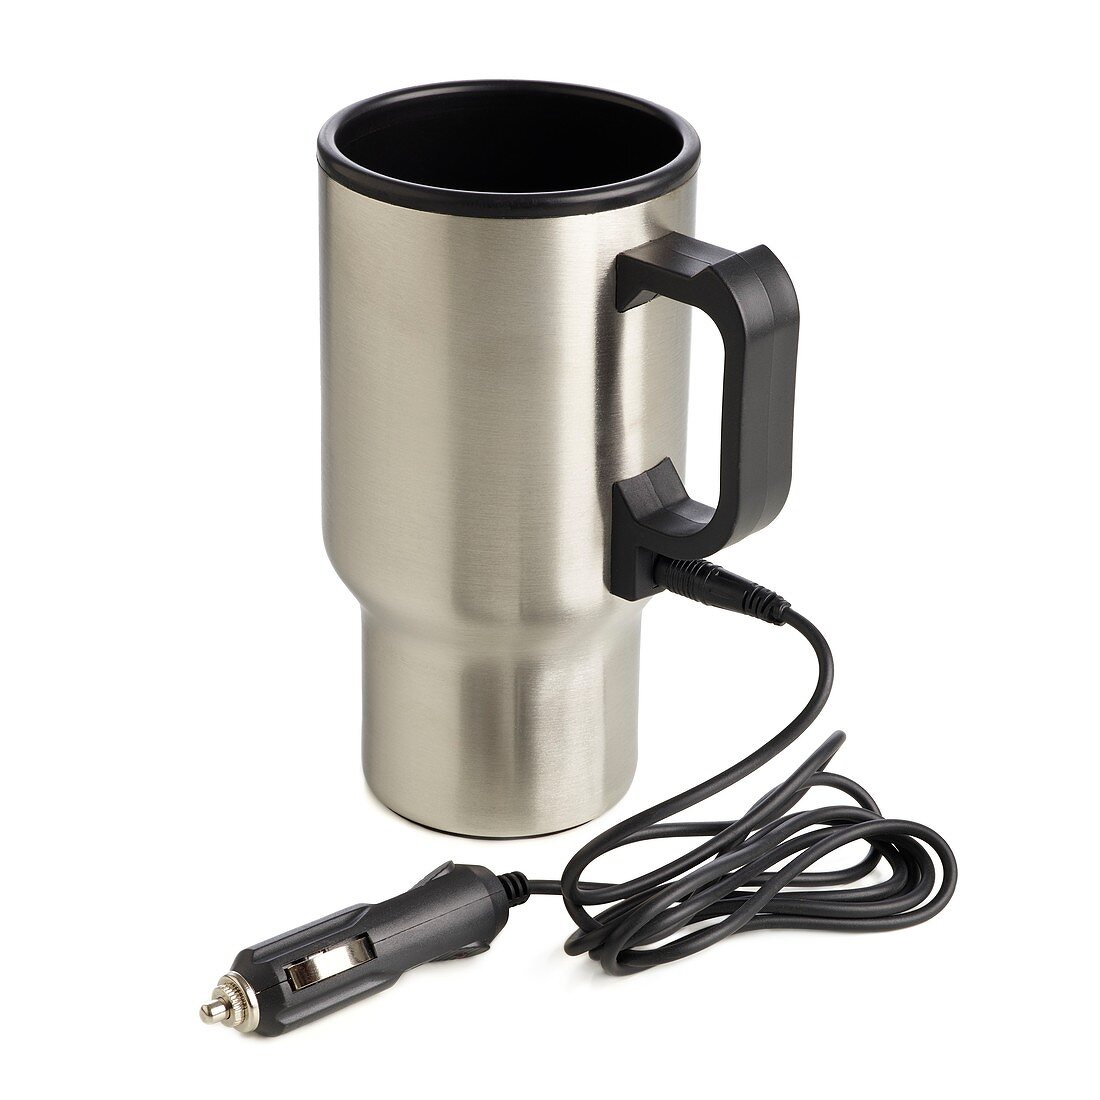 Travel mug and car charger